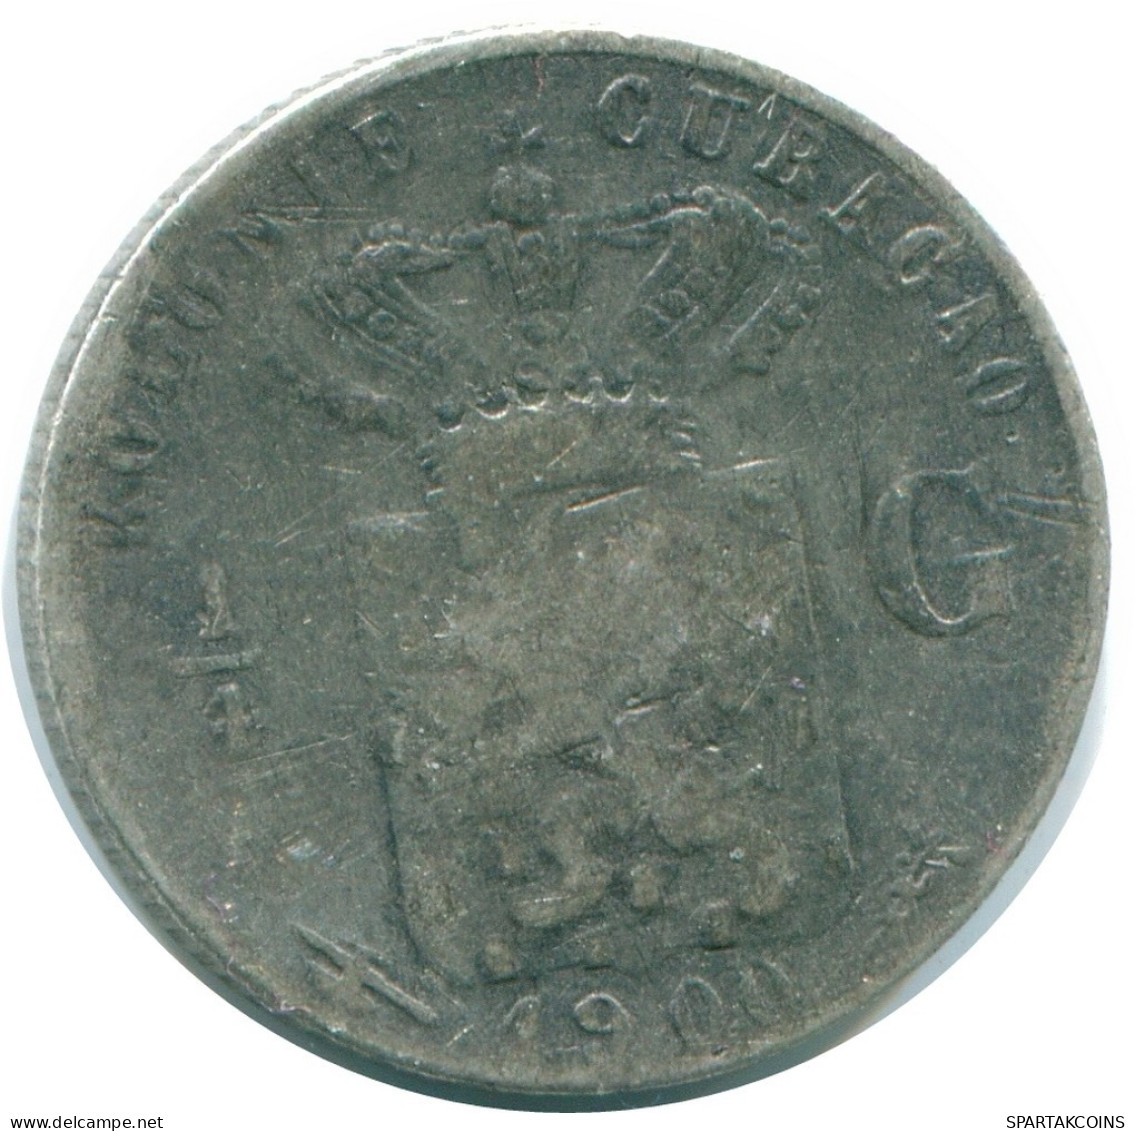 1/4 GULDEN 1900 CURACAO Netherlands SILVER Colonial Coin #NL10451.4.U.A - Curaçao